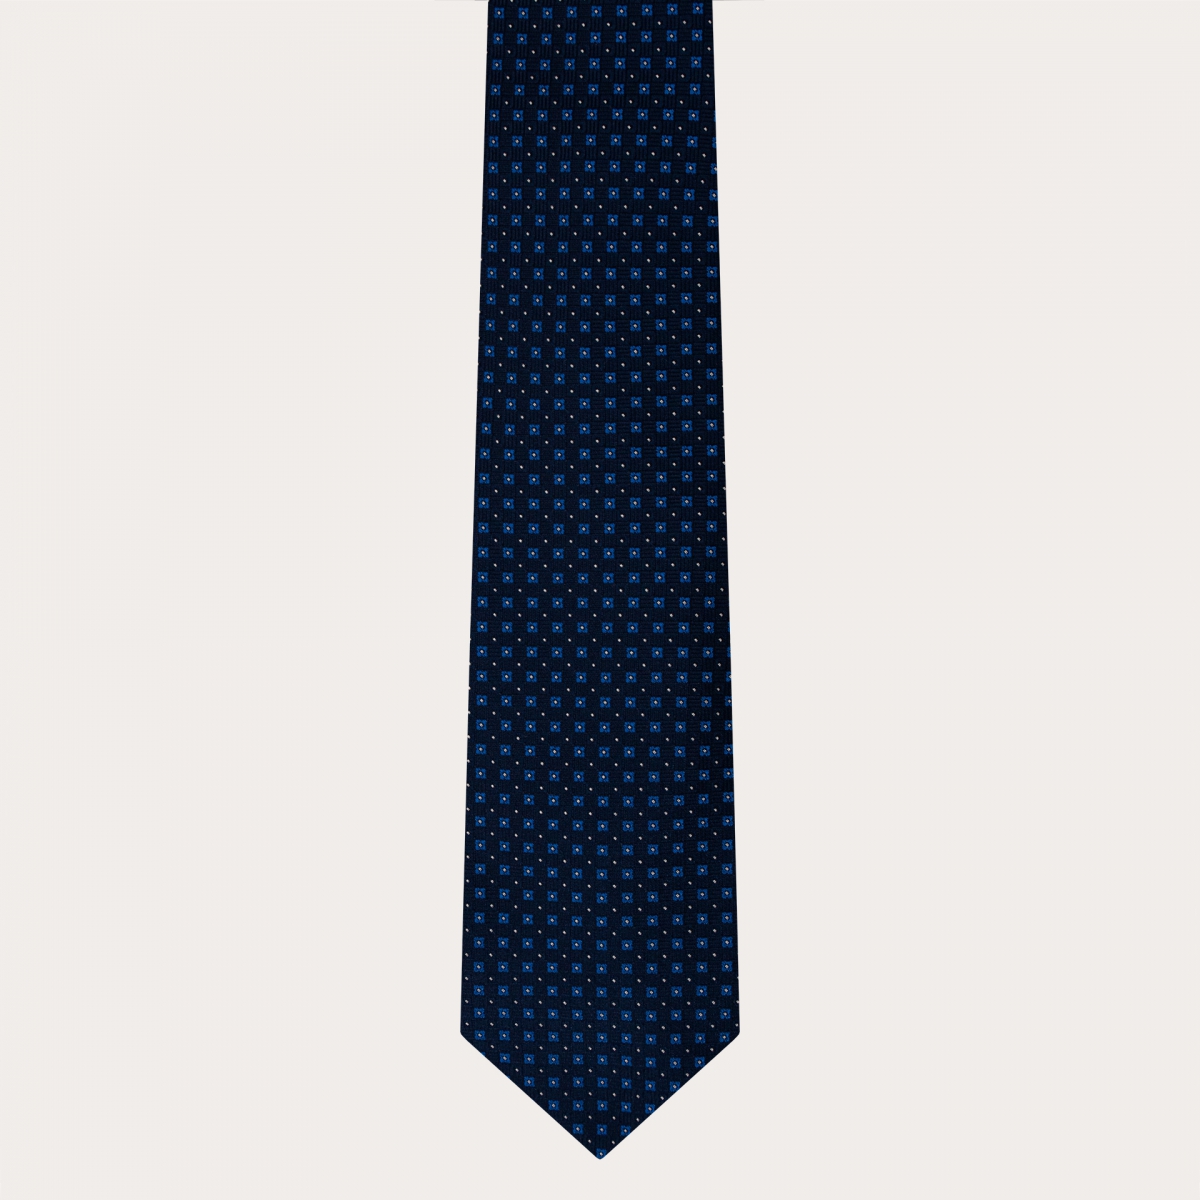 BRUCLEElegante Krawatte aus Jacquard-Seide, blau mit floralem Mikromuster